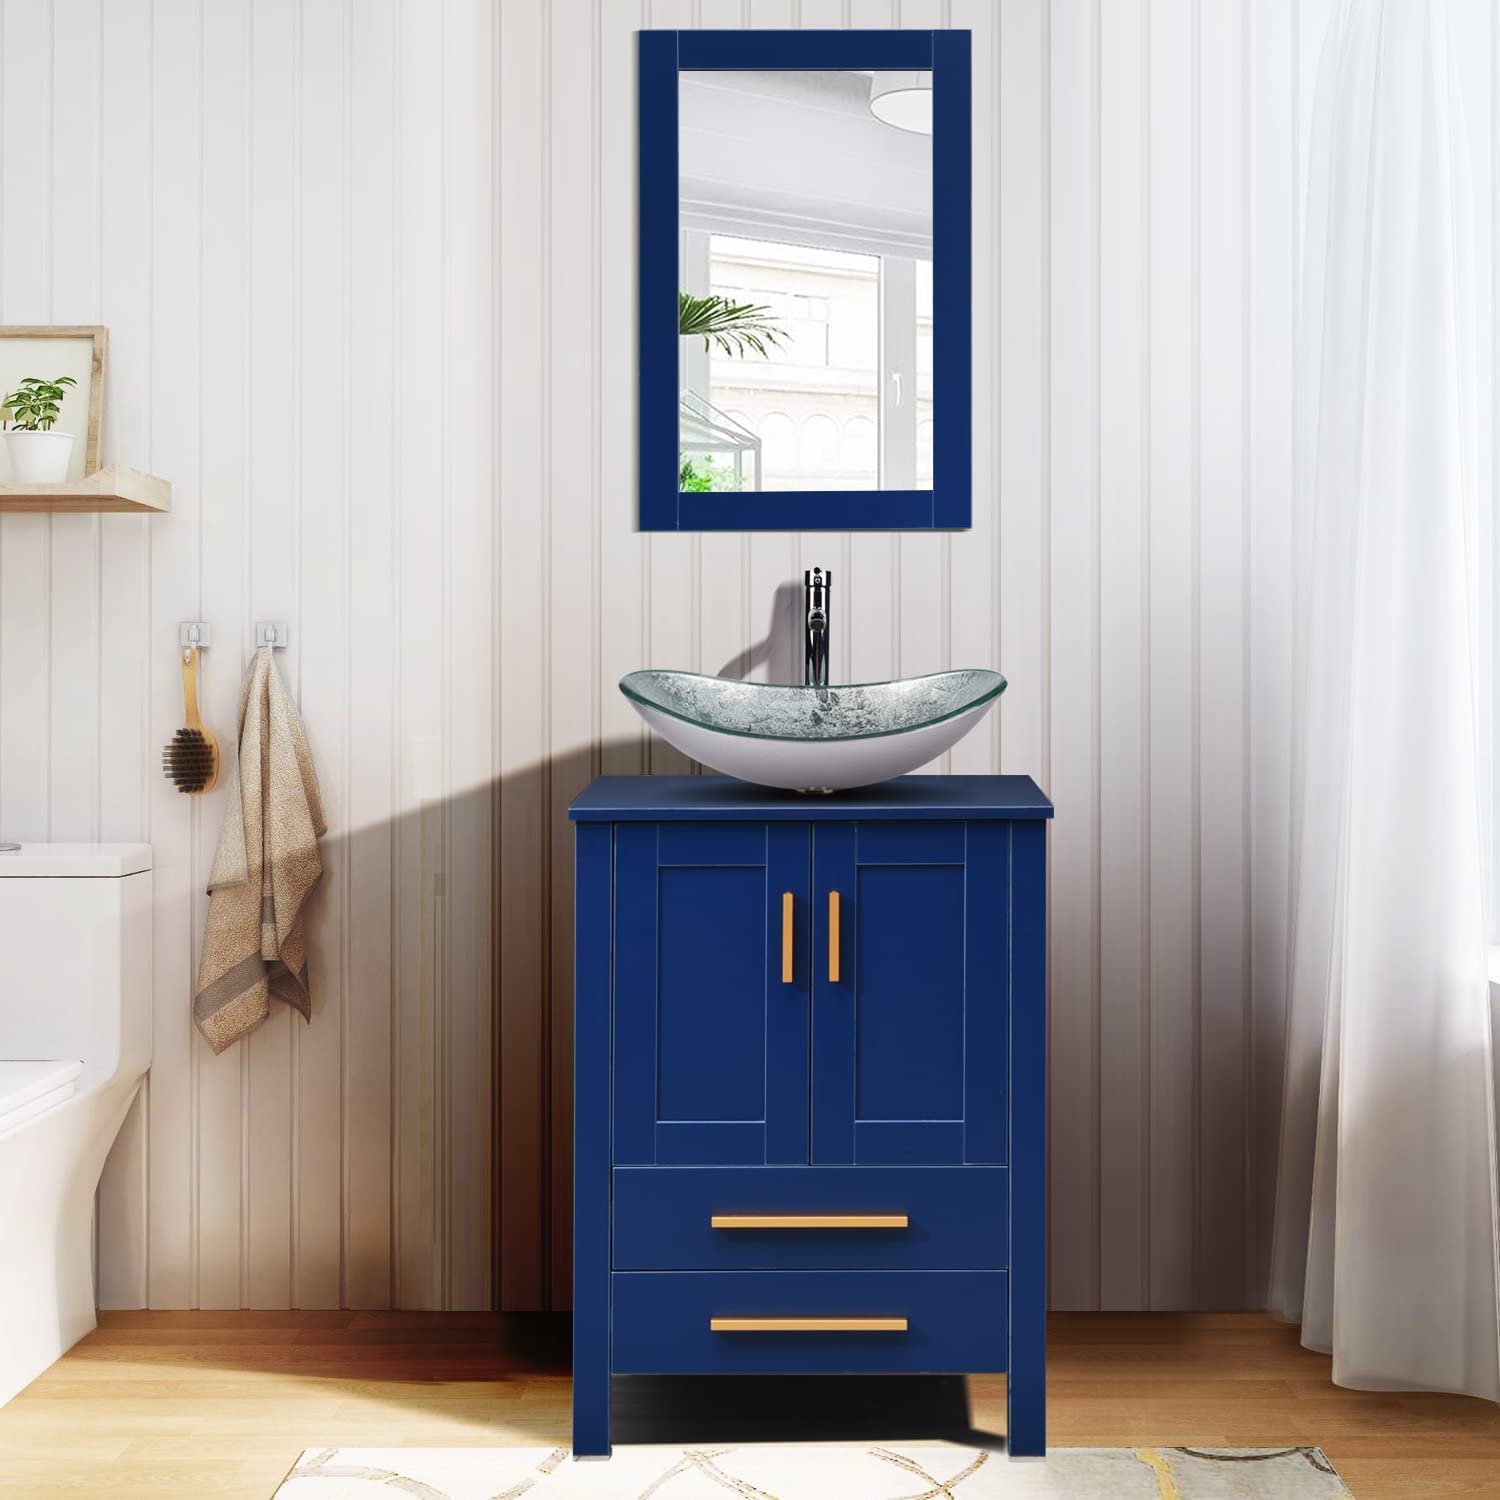 Elecwish 24'' bathroom wood vanity with silver boat glass sink